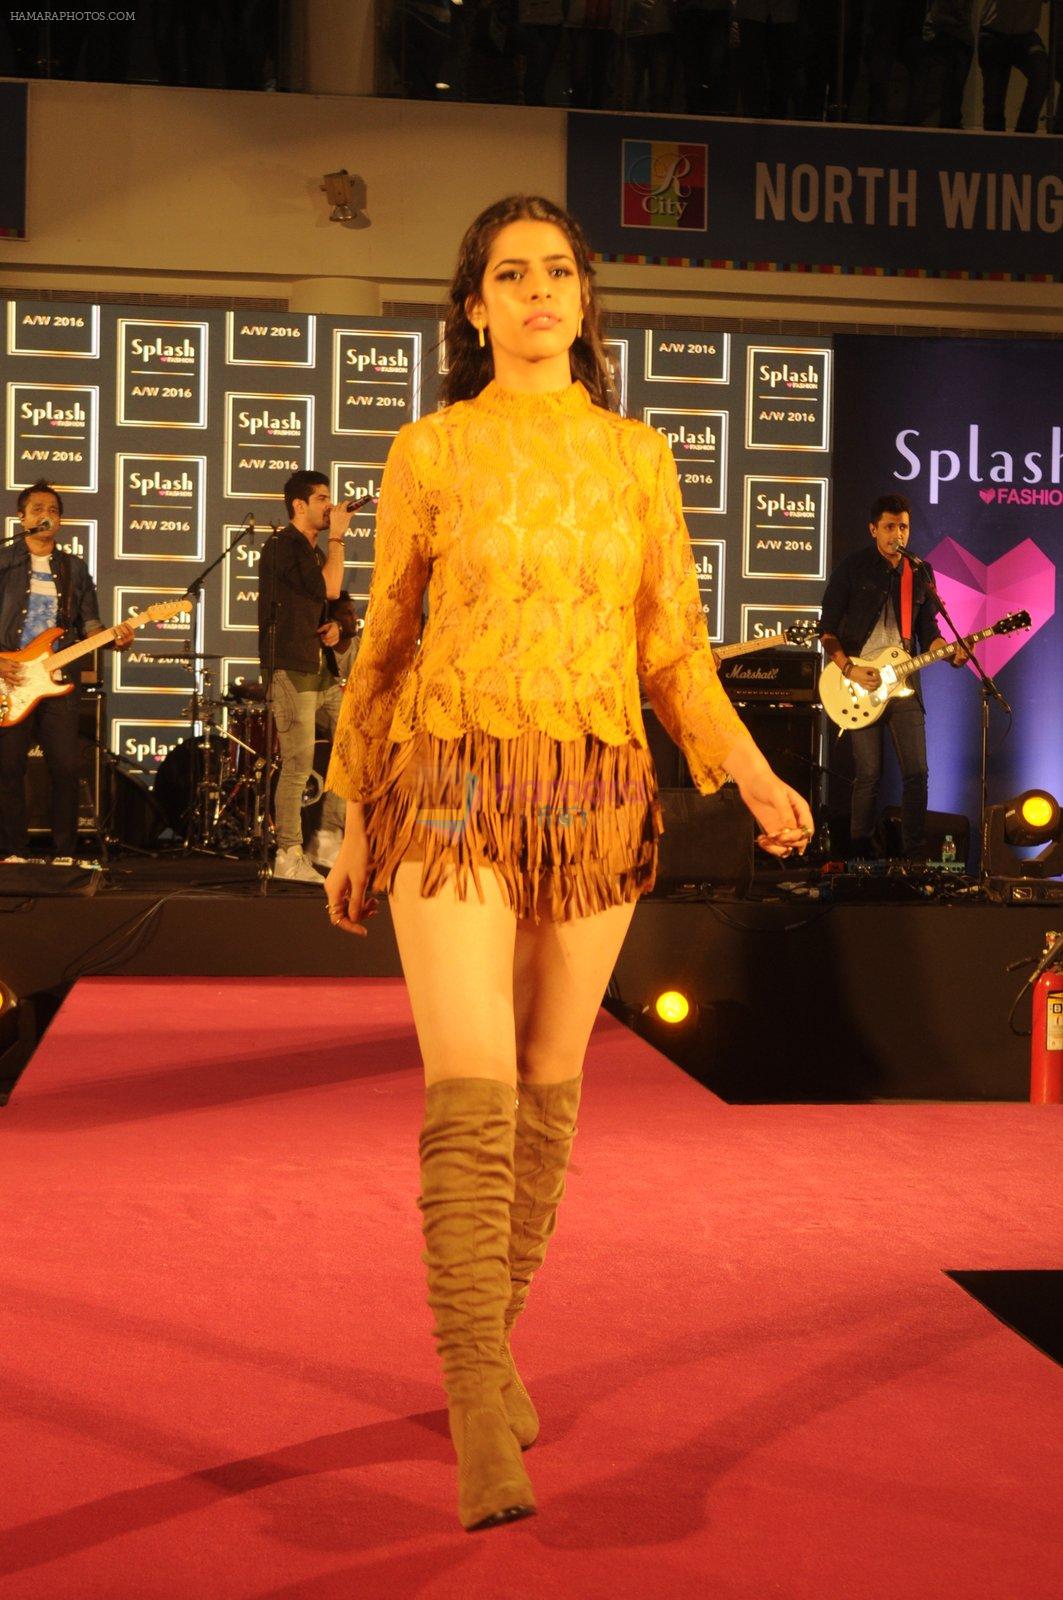 Splash fashion show in Mumbai on 10th Sept 2016